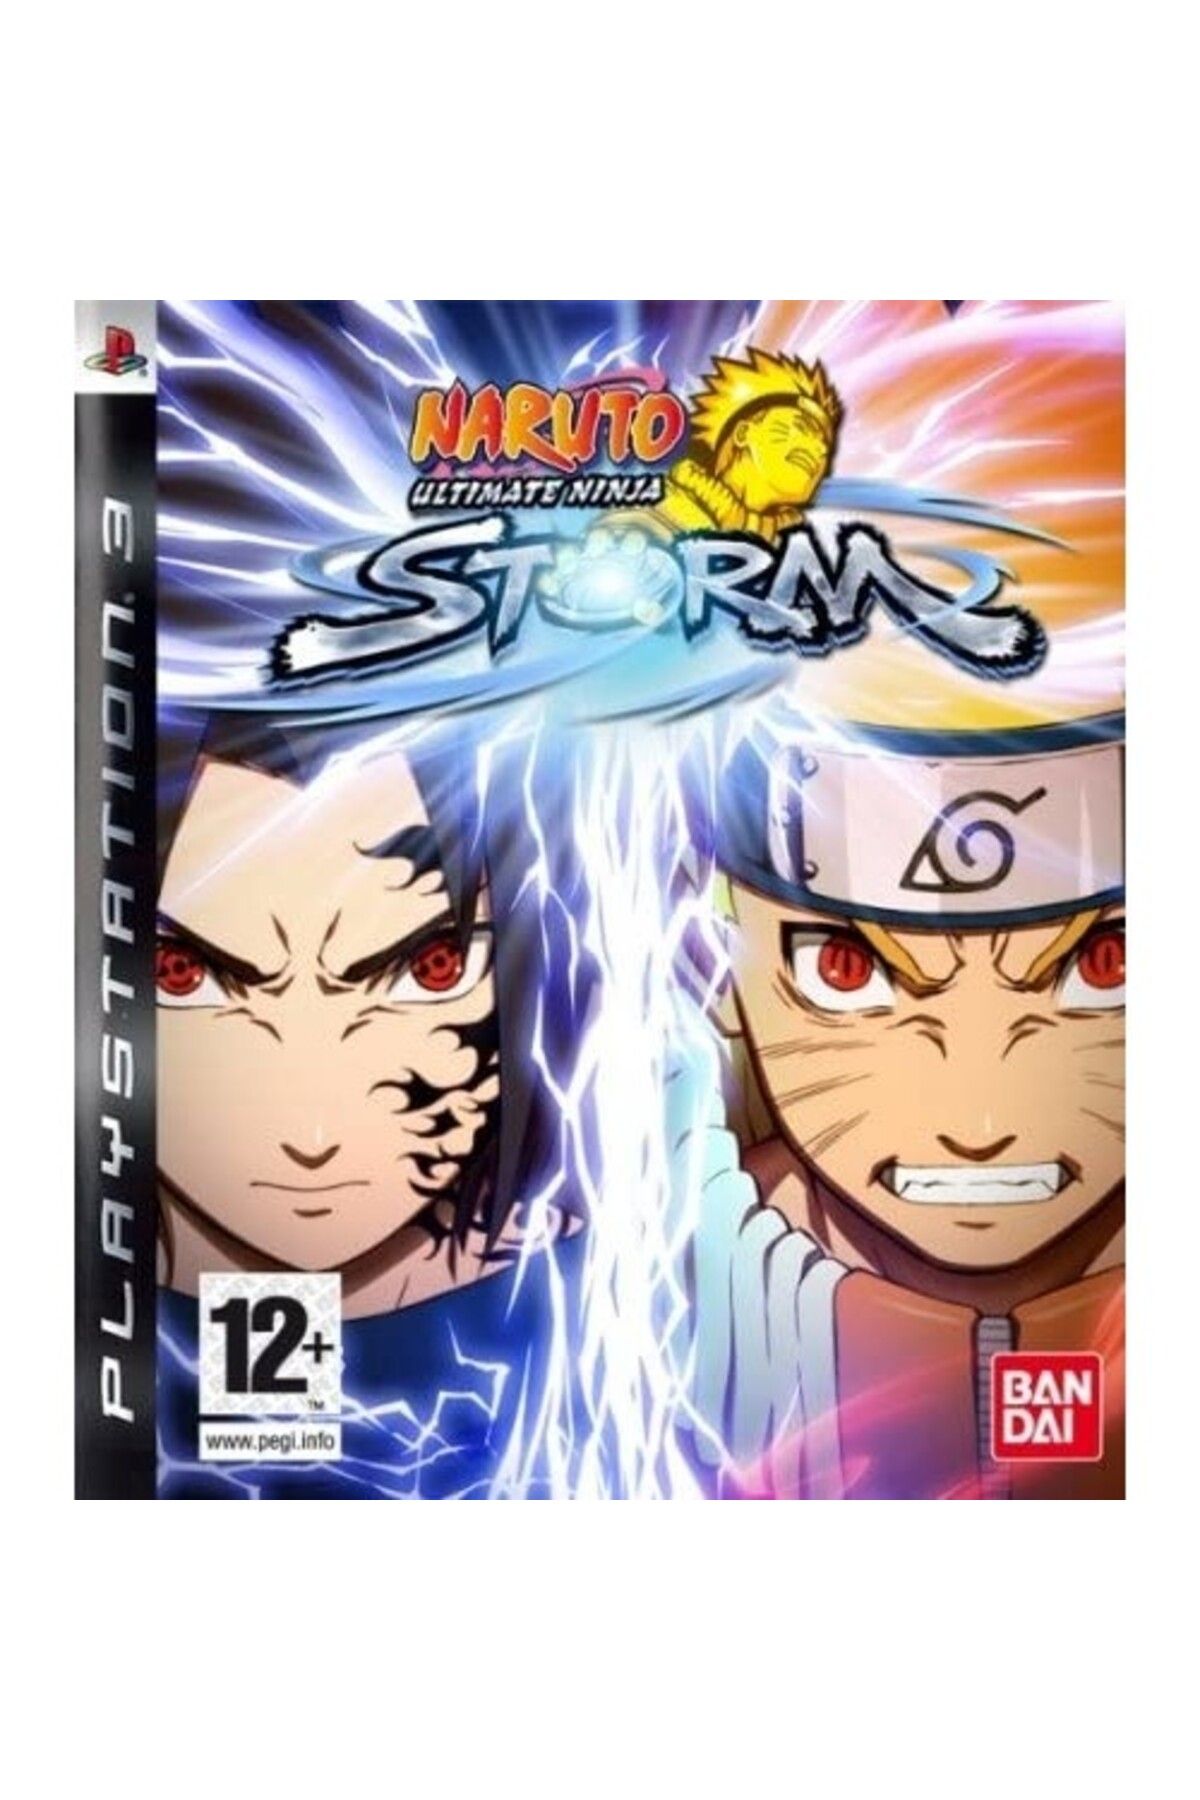 Sony Ps3 Naruto Ultimate Ninja Storm